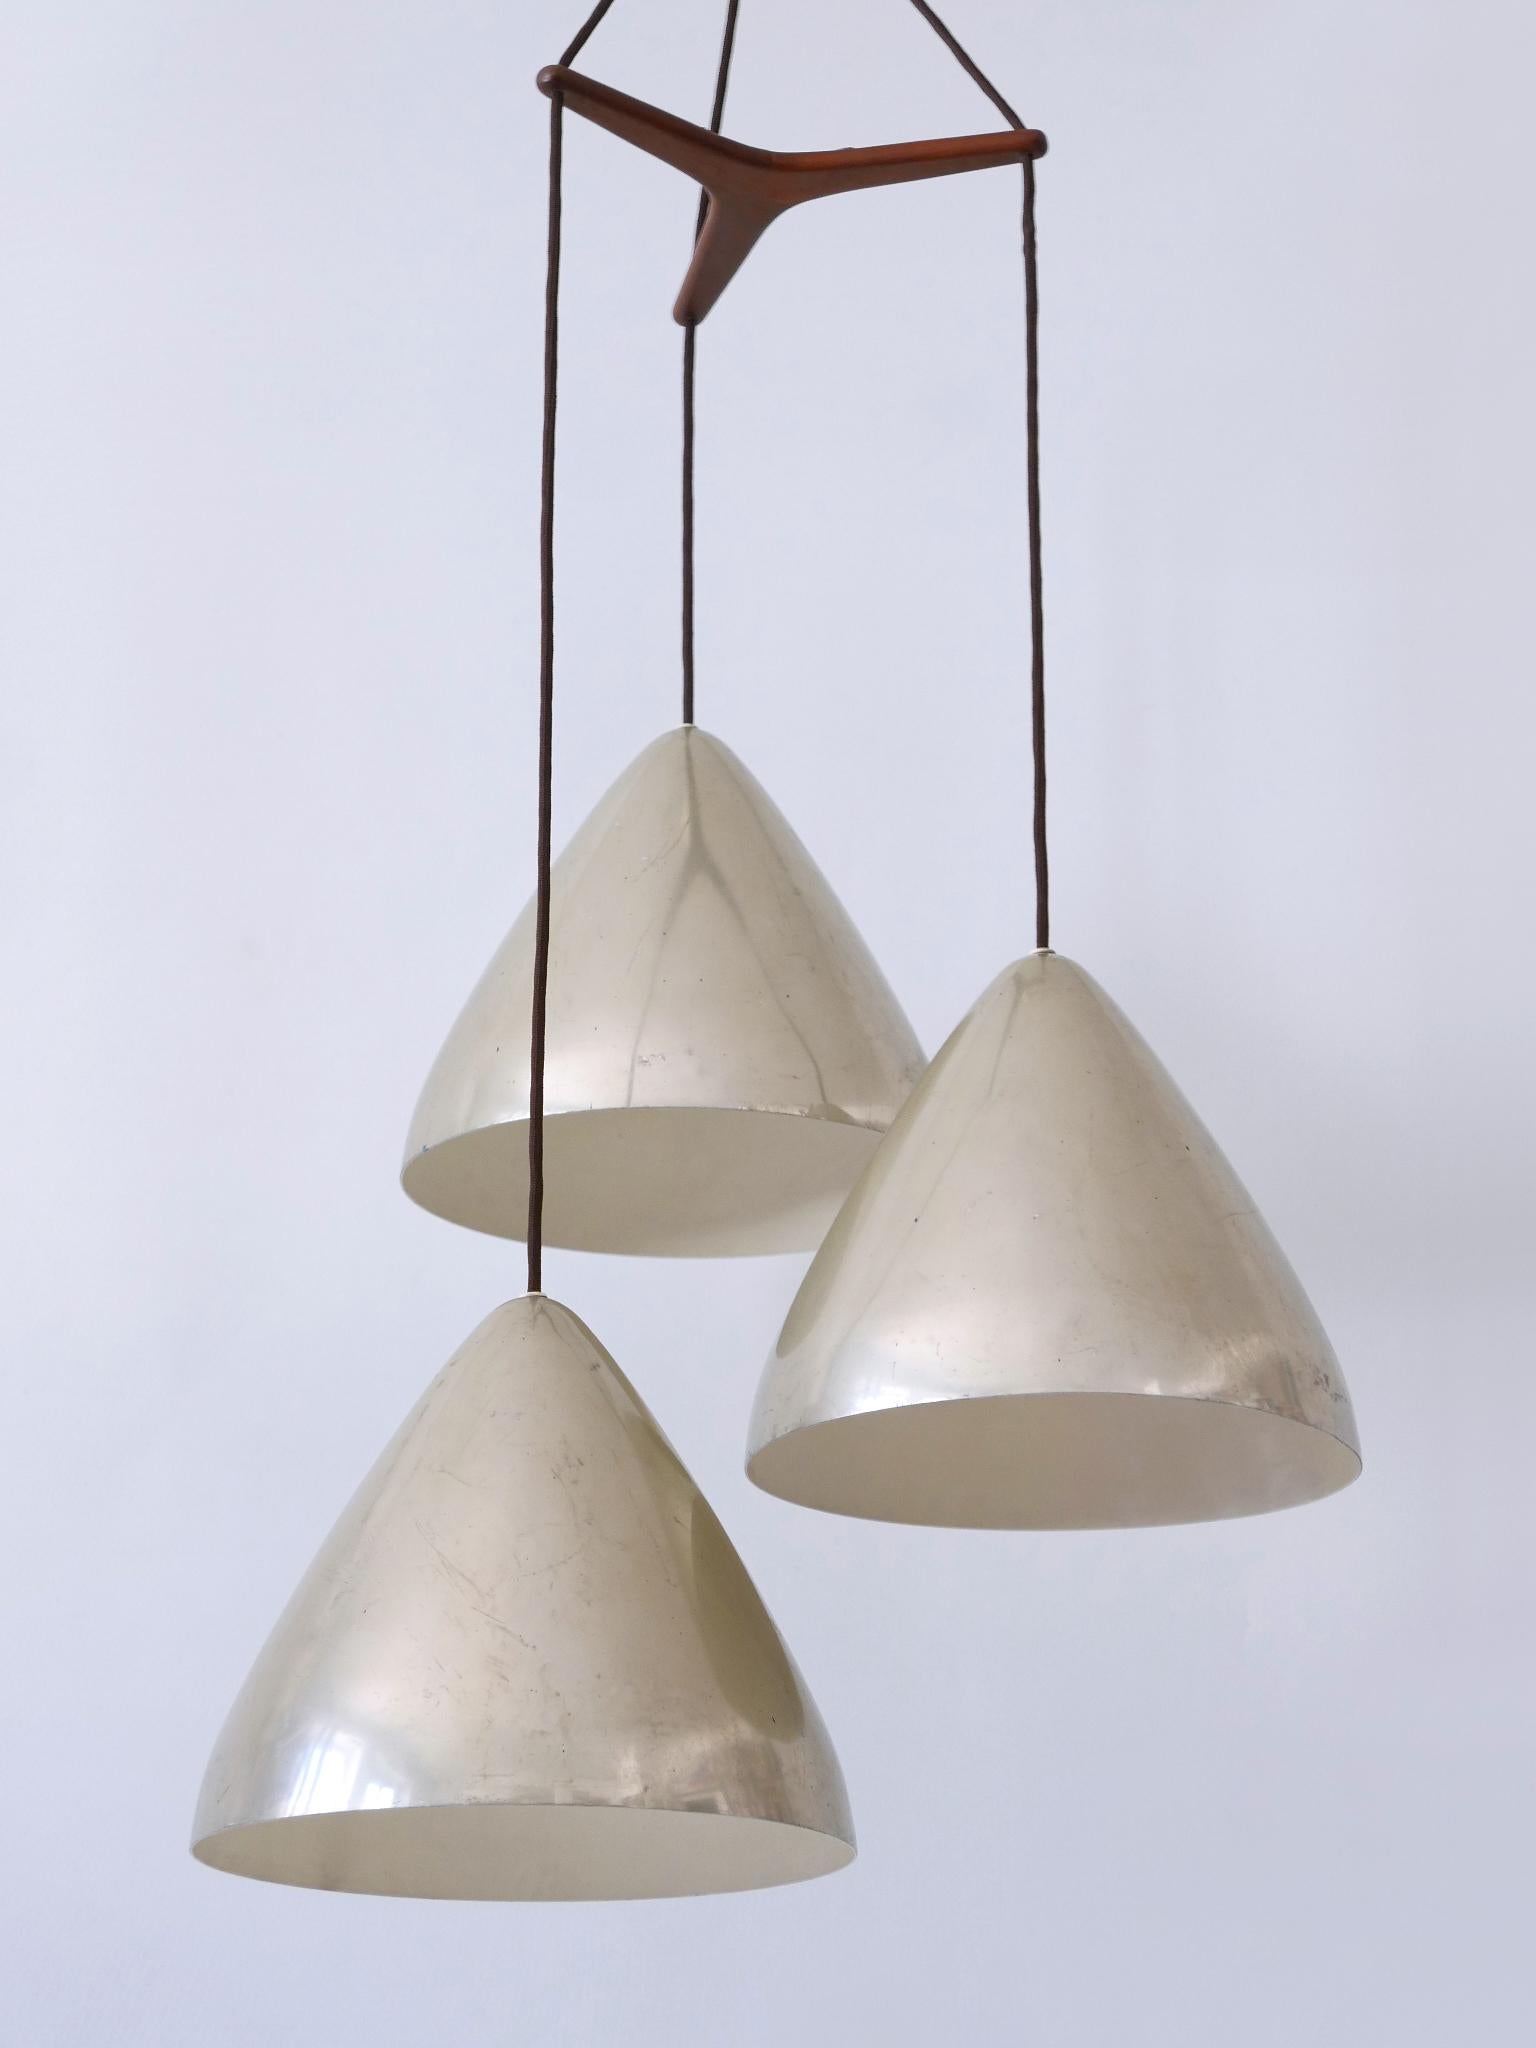 Aluminum Elegant Cascading Pendant Lamp by Lisa Johansson-Pape for Orno Finland 1960s For Sale